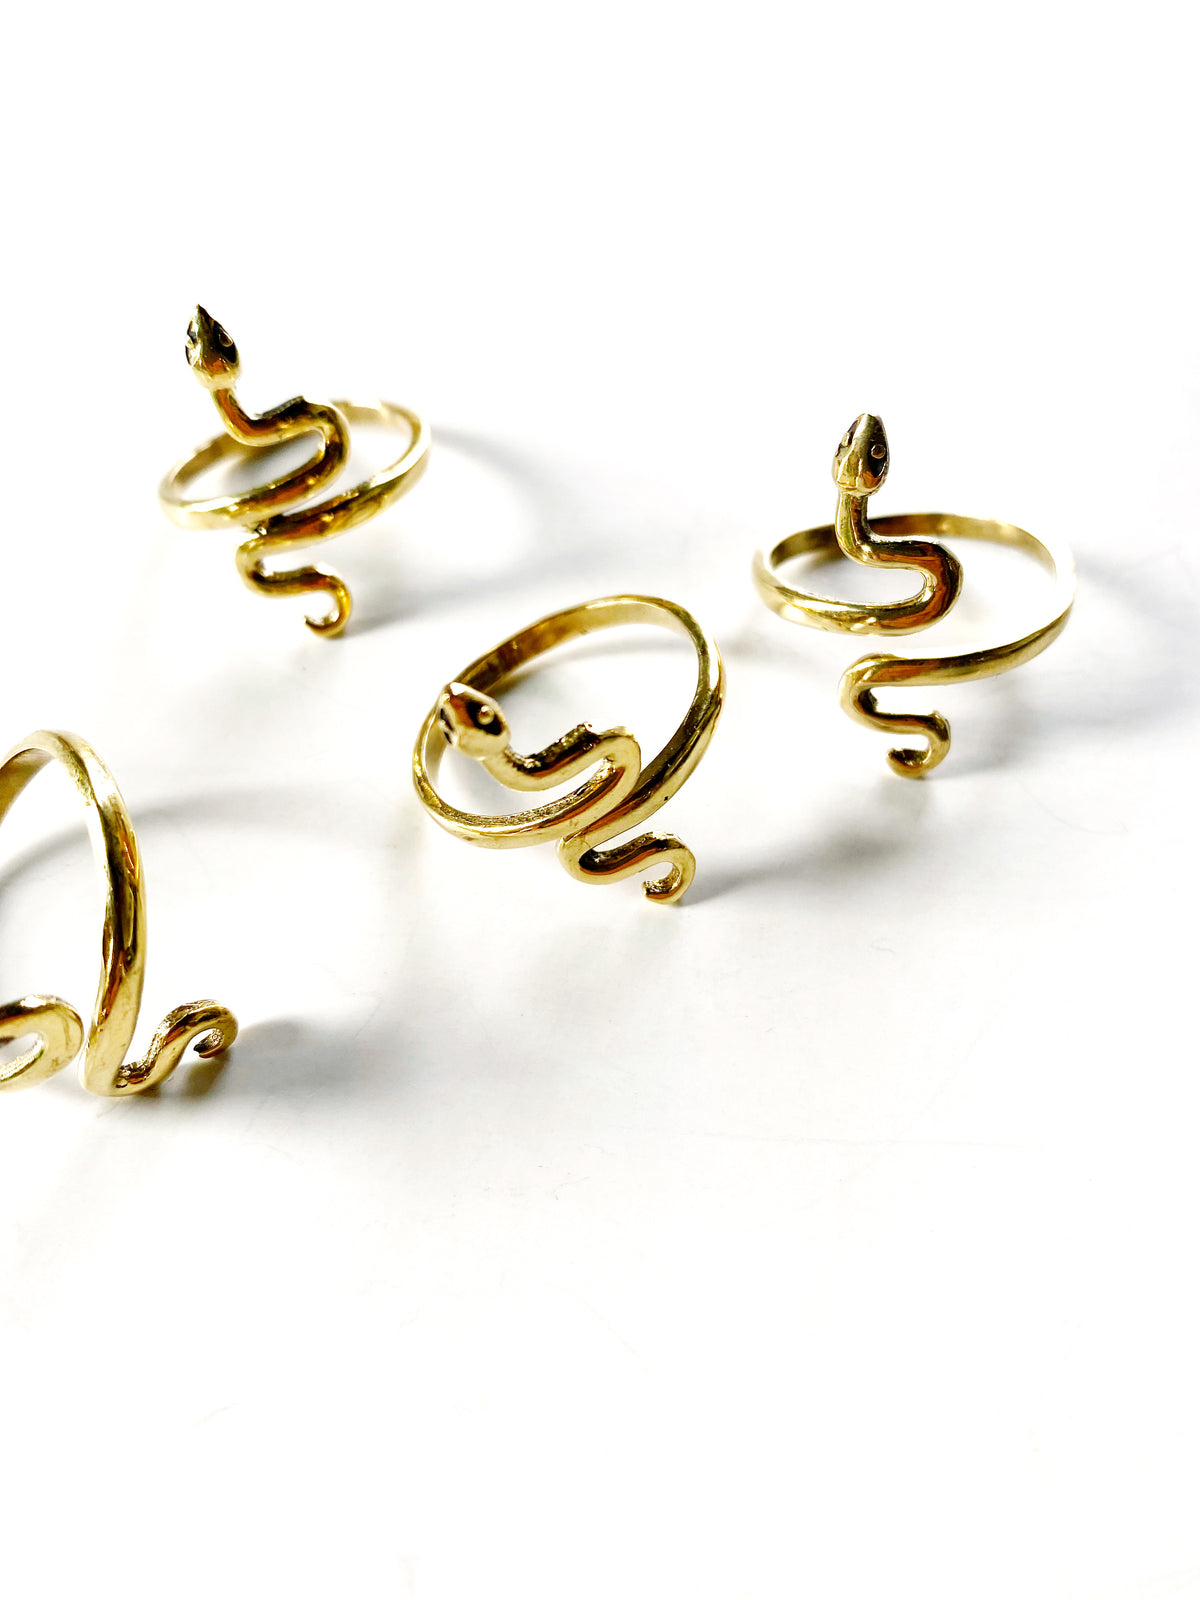 Brass snake serpent cobra ring adjustable 3 styles handmade: 1